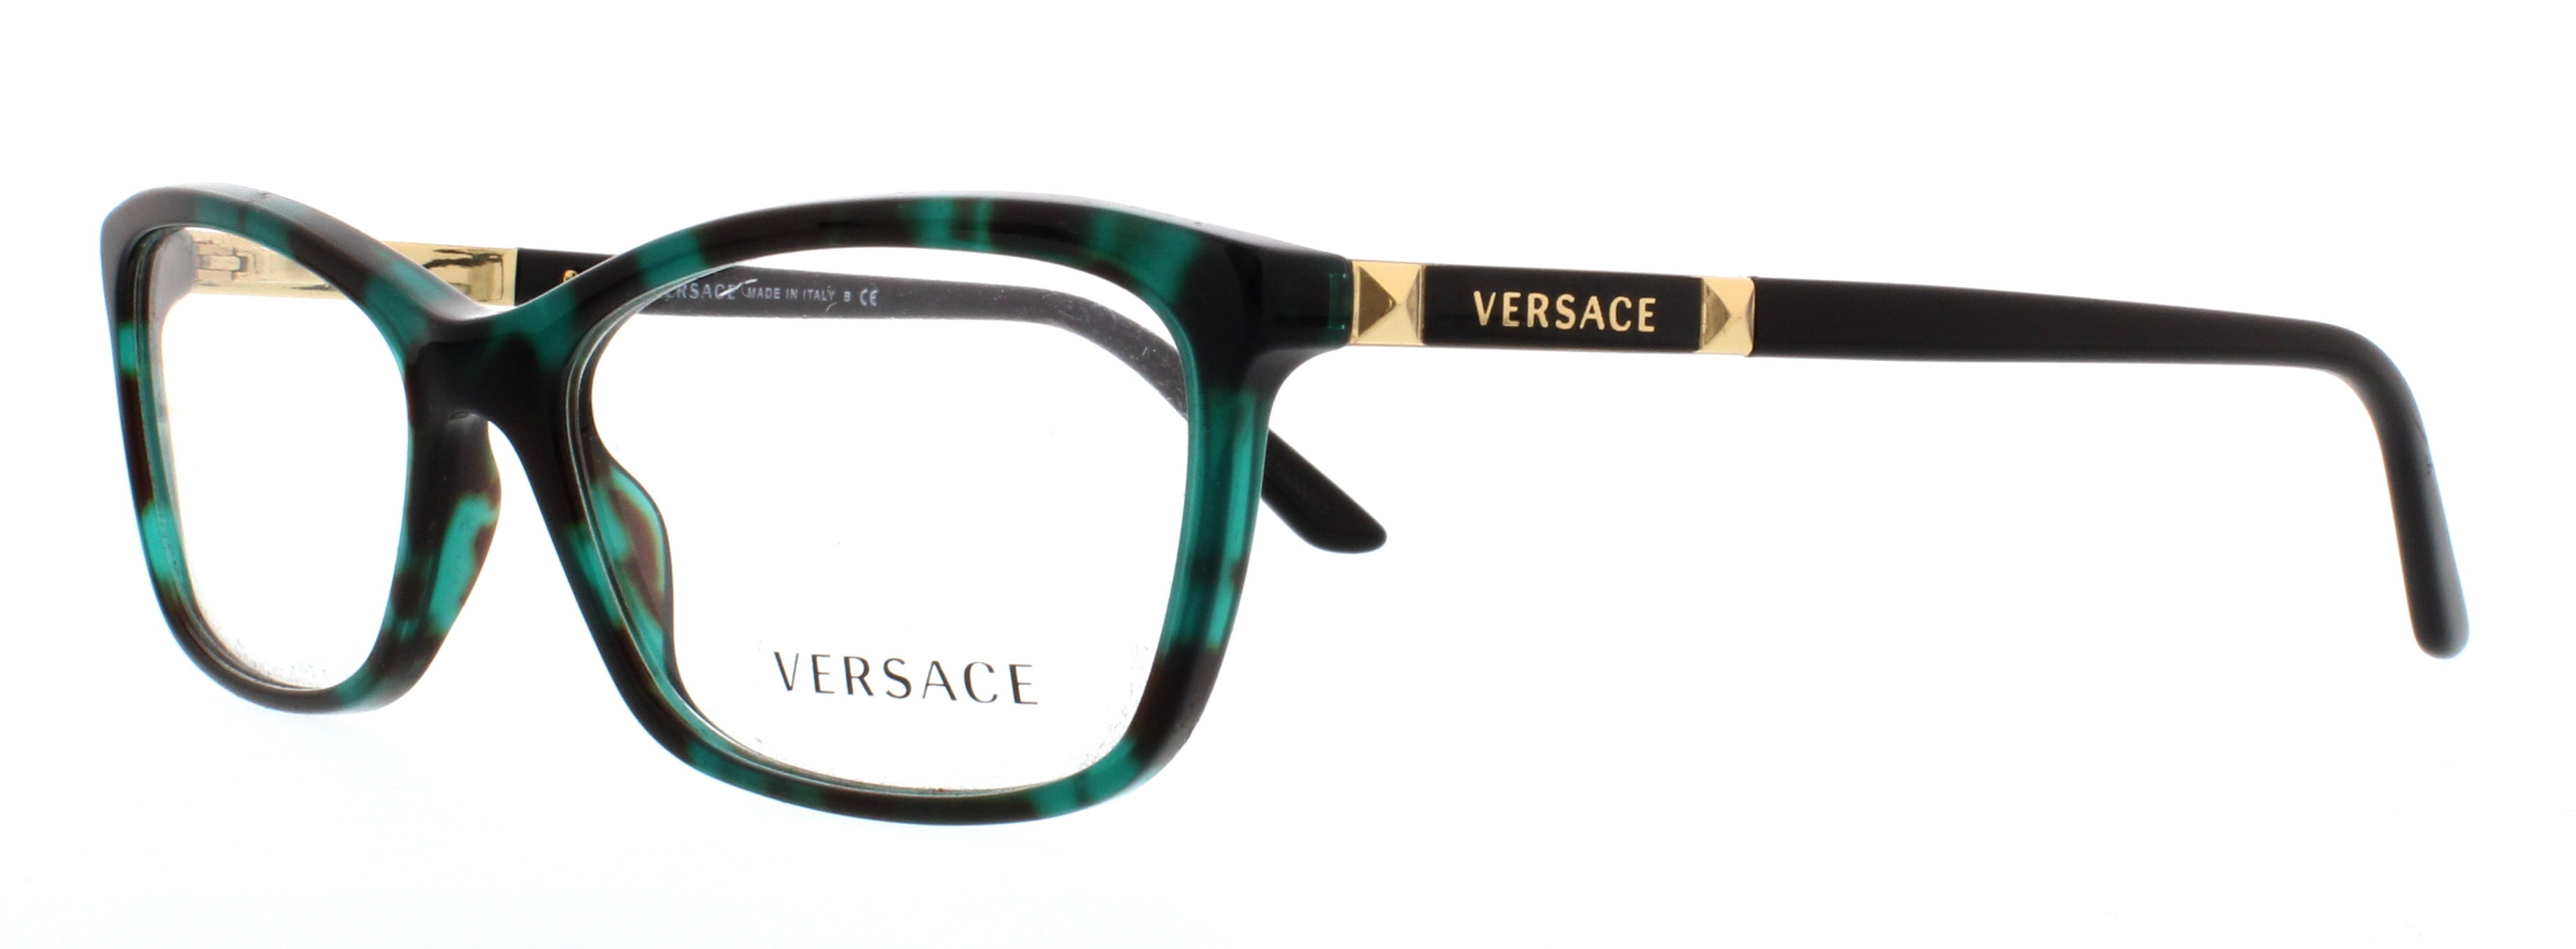 versace prescription eyewear